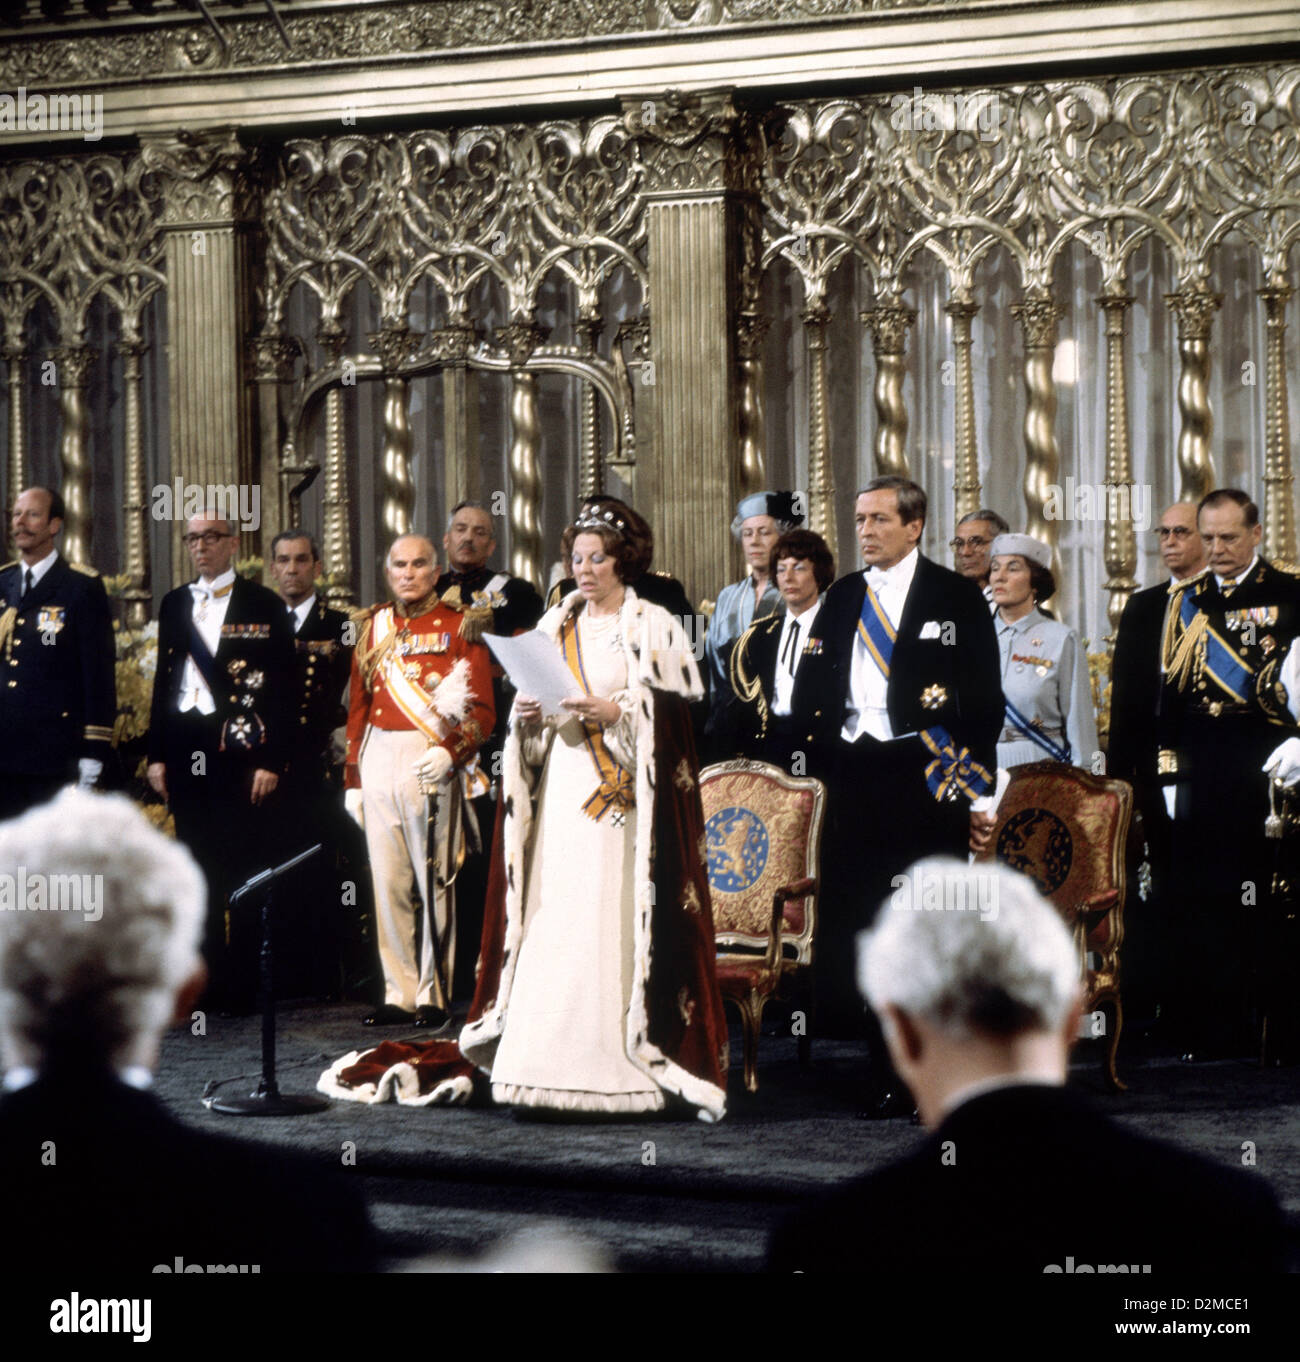 Queen Beatrix Of The Netherlands Abdication File Pix Enthronement D2MCE1 